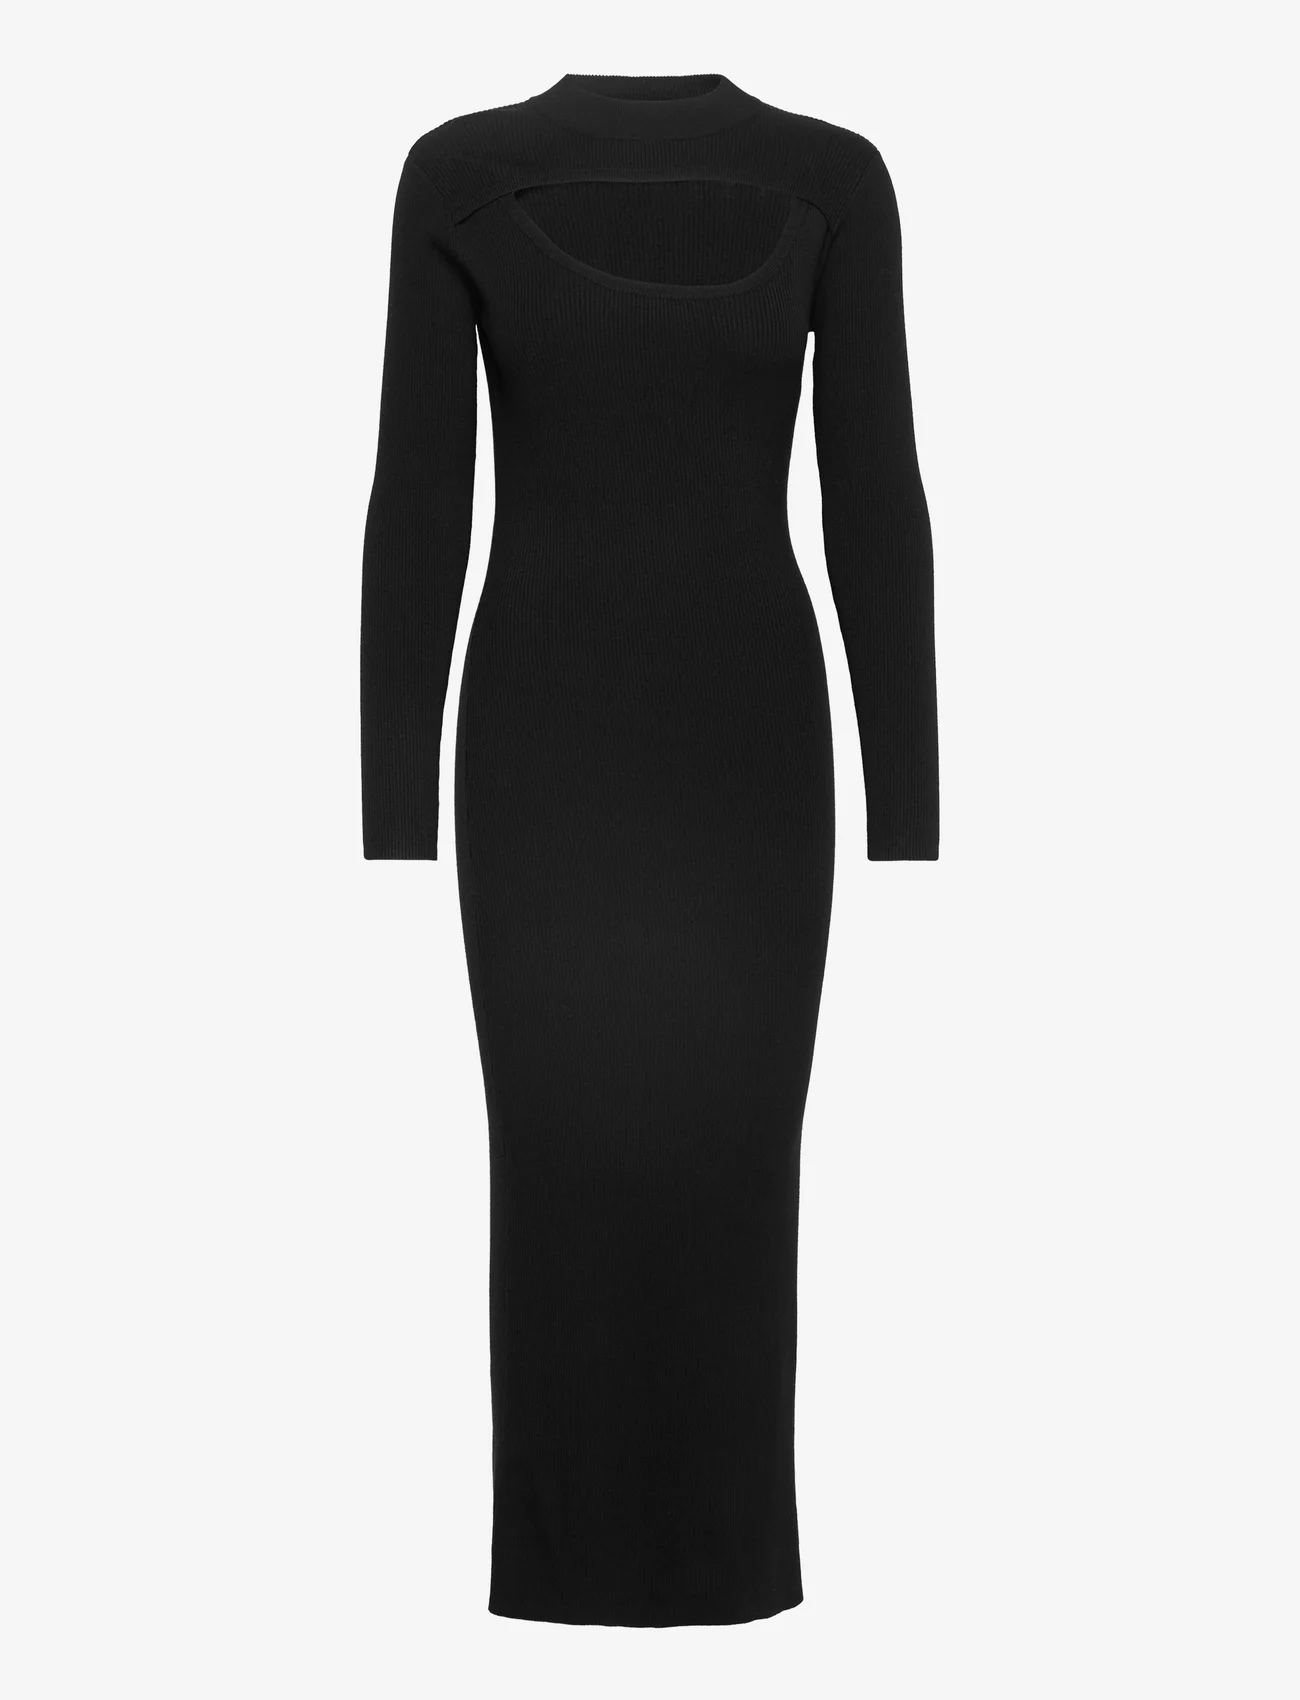 Munthe - ABBAT - bodycon dresses - black - 0